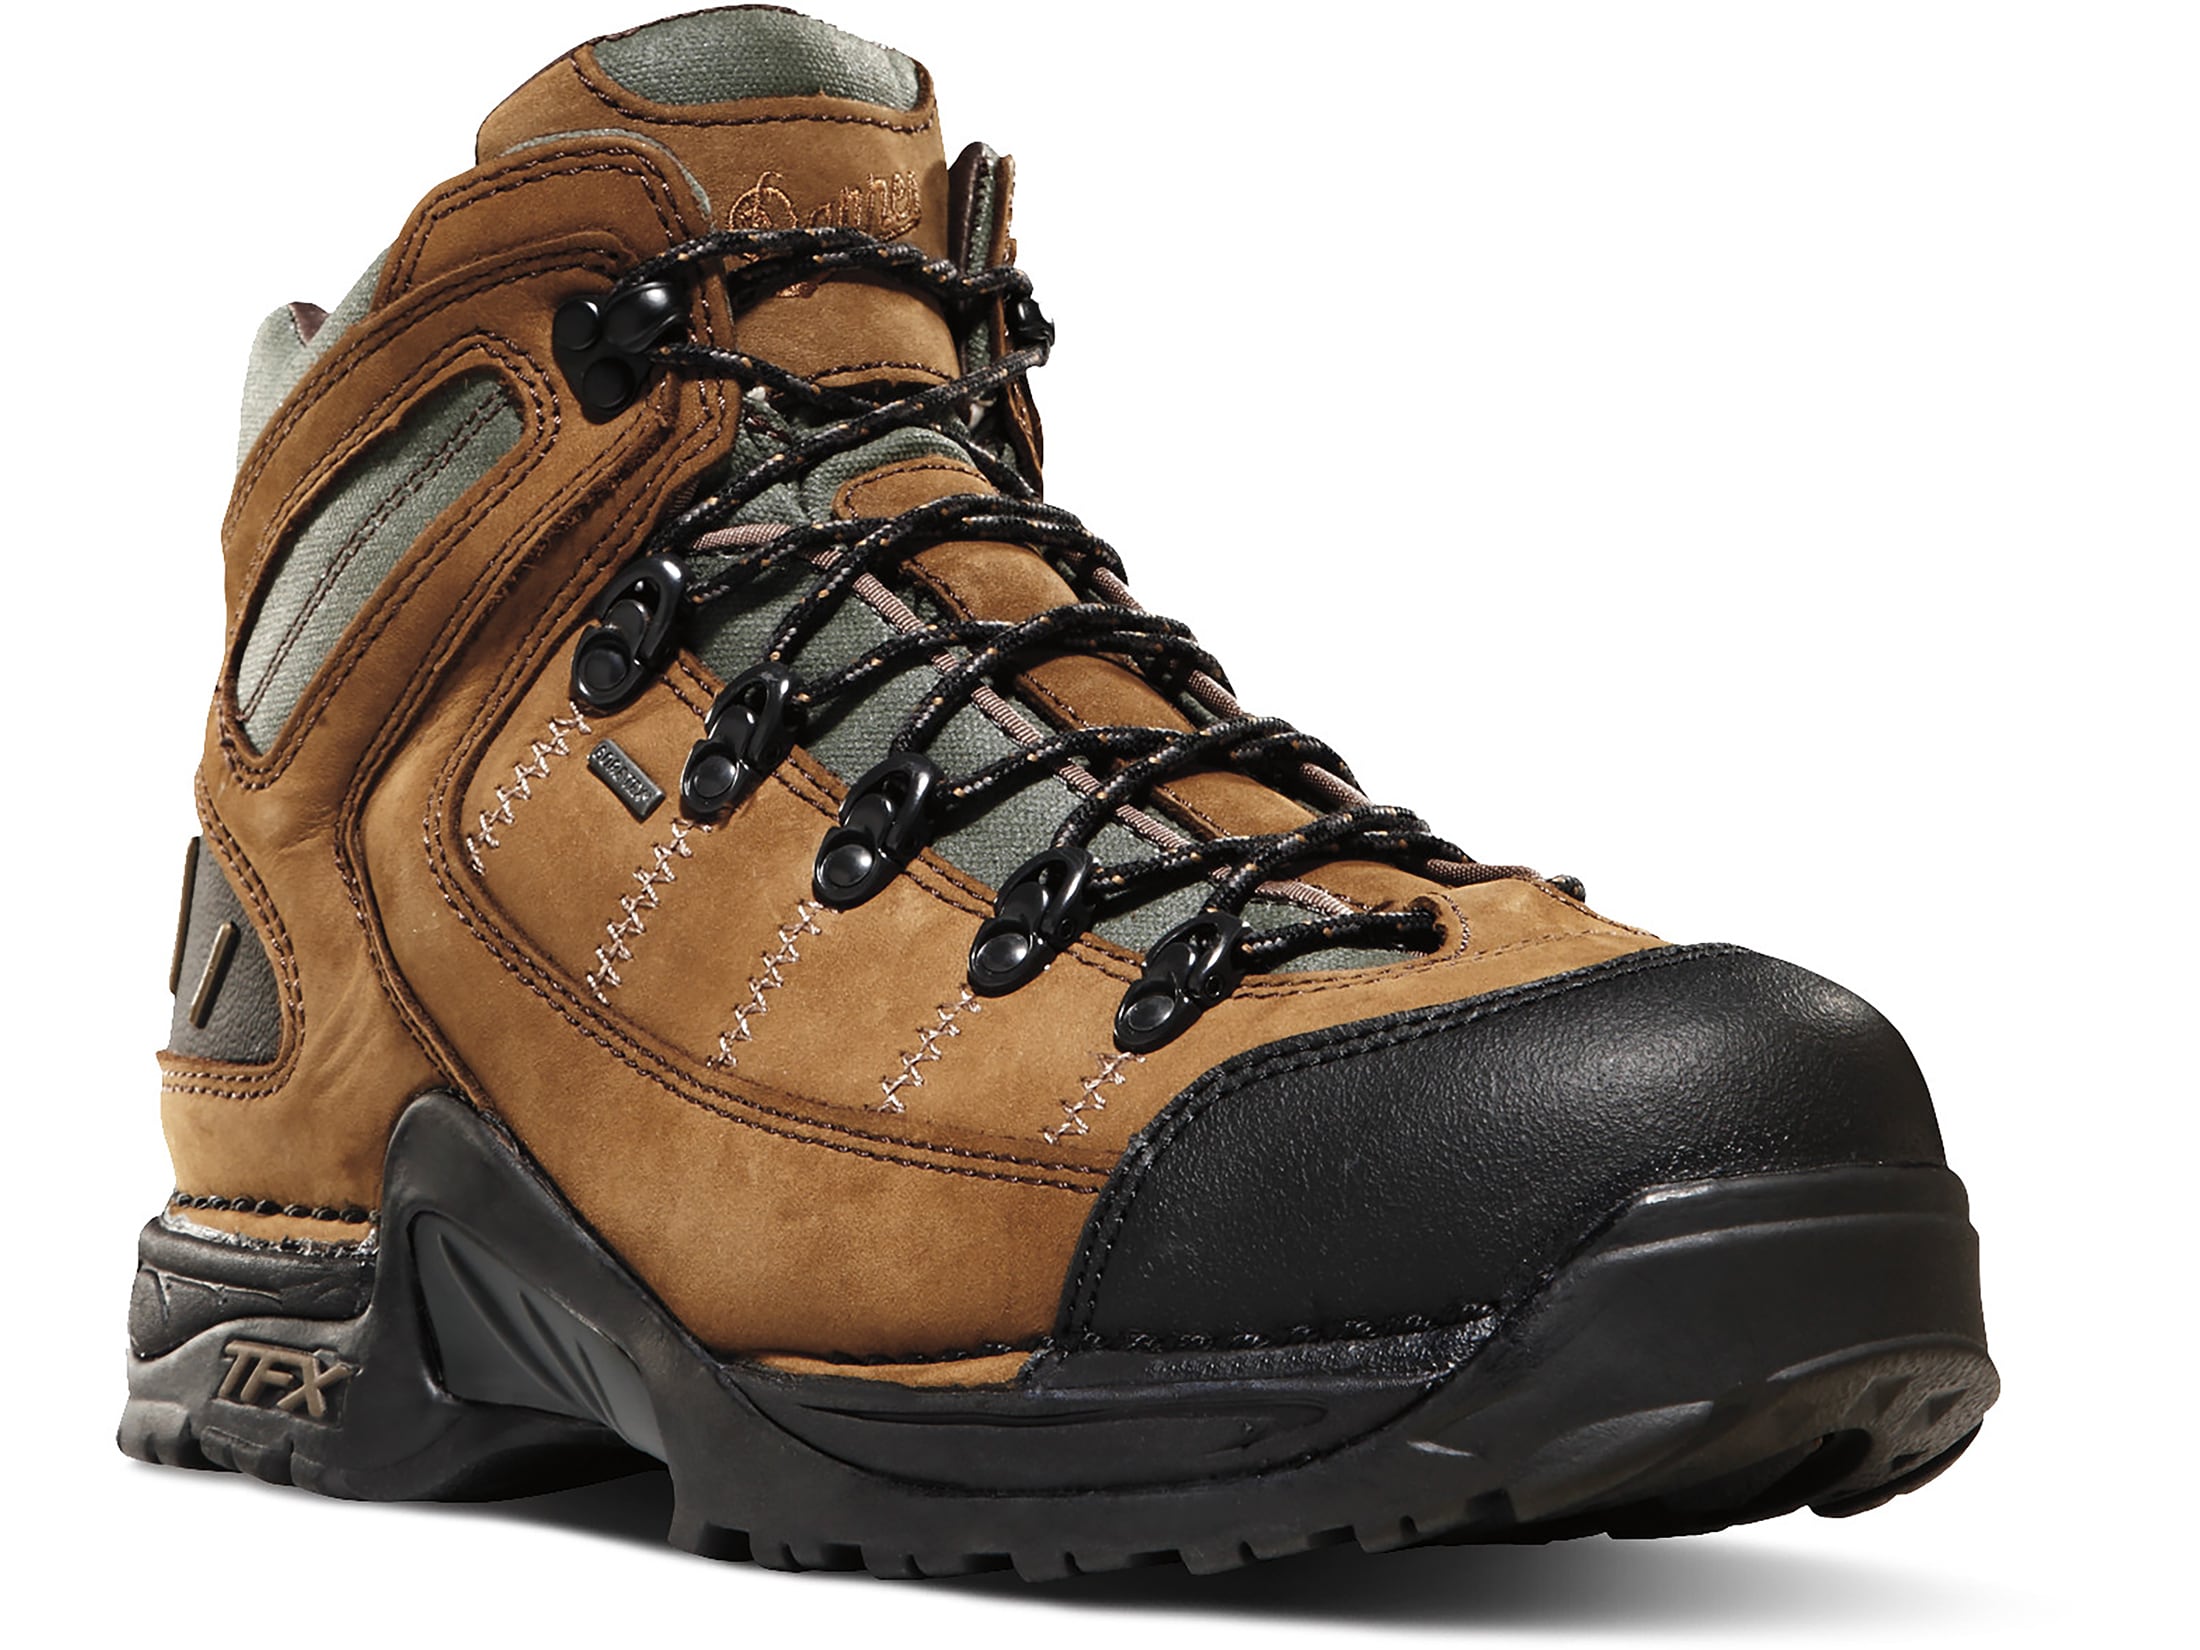 Danner 453 5.5 GORE-TEX Hiking Boots Leather Dark Tan Men's 8 D